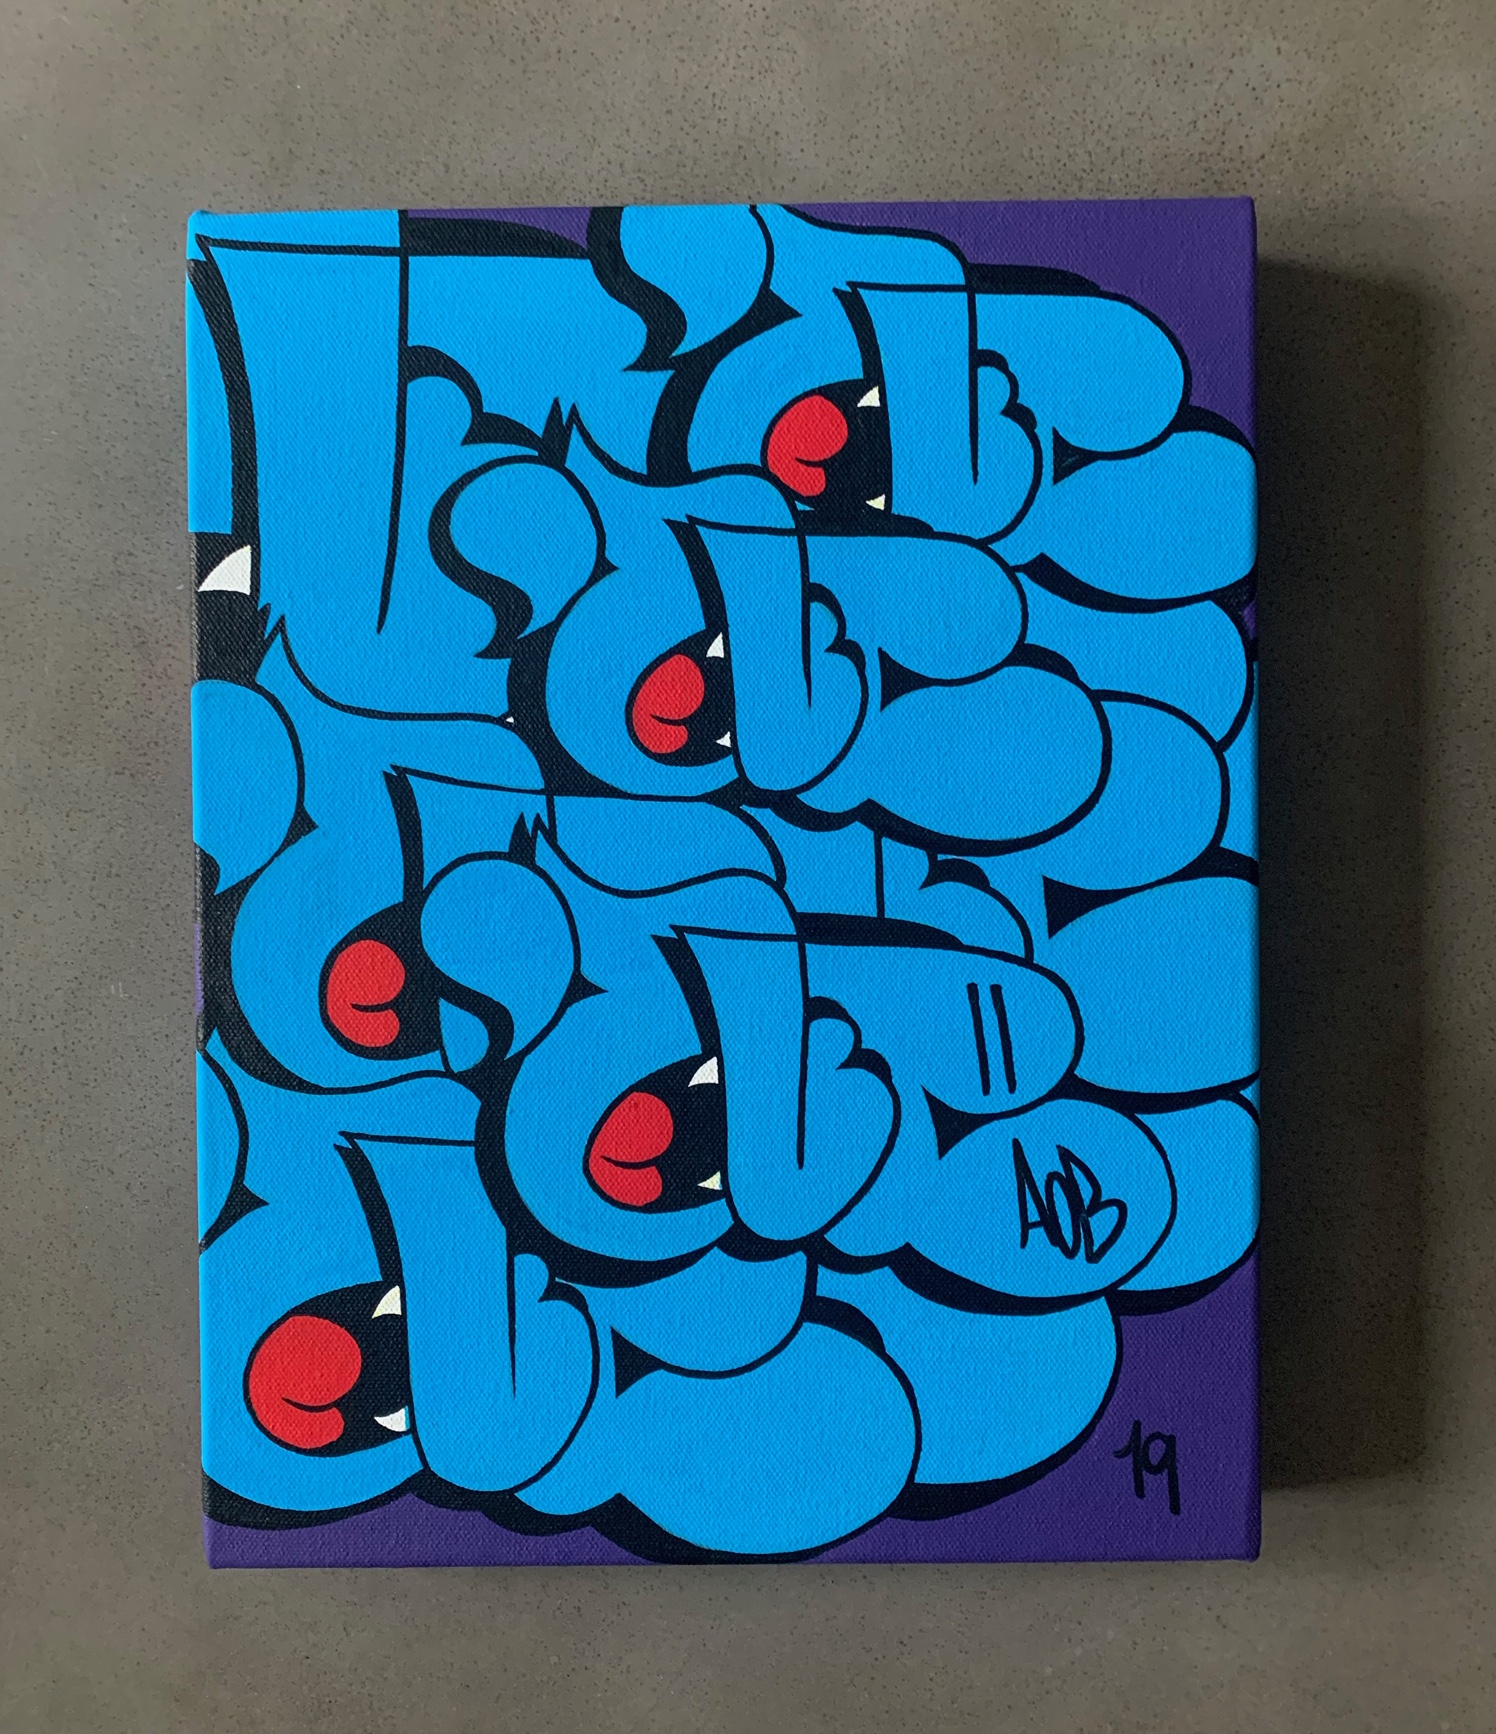 11x14' Nover Blue Throwie Canvas, 2019.